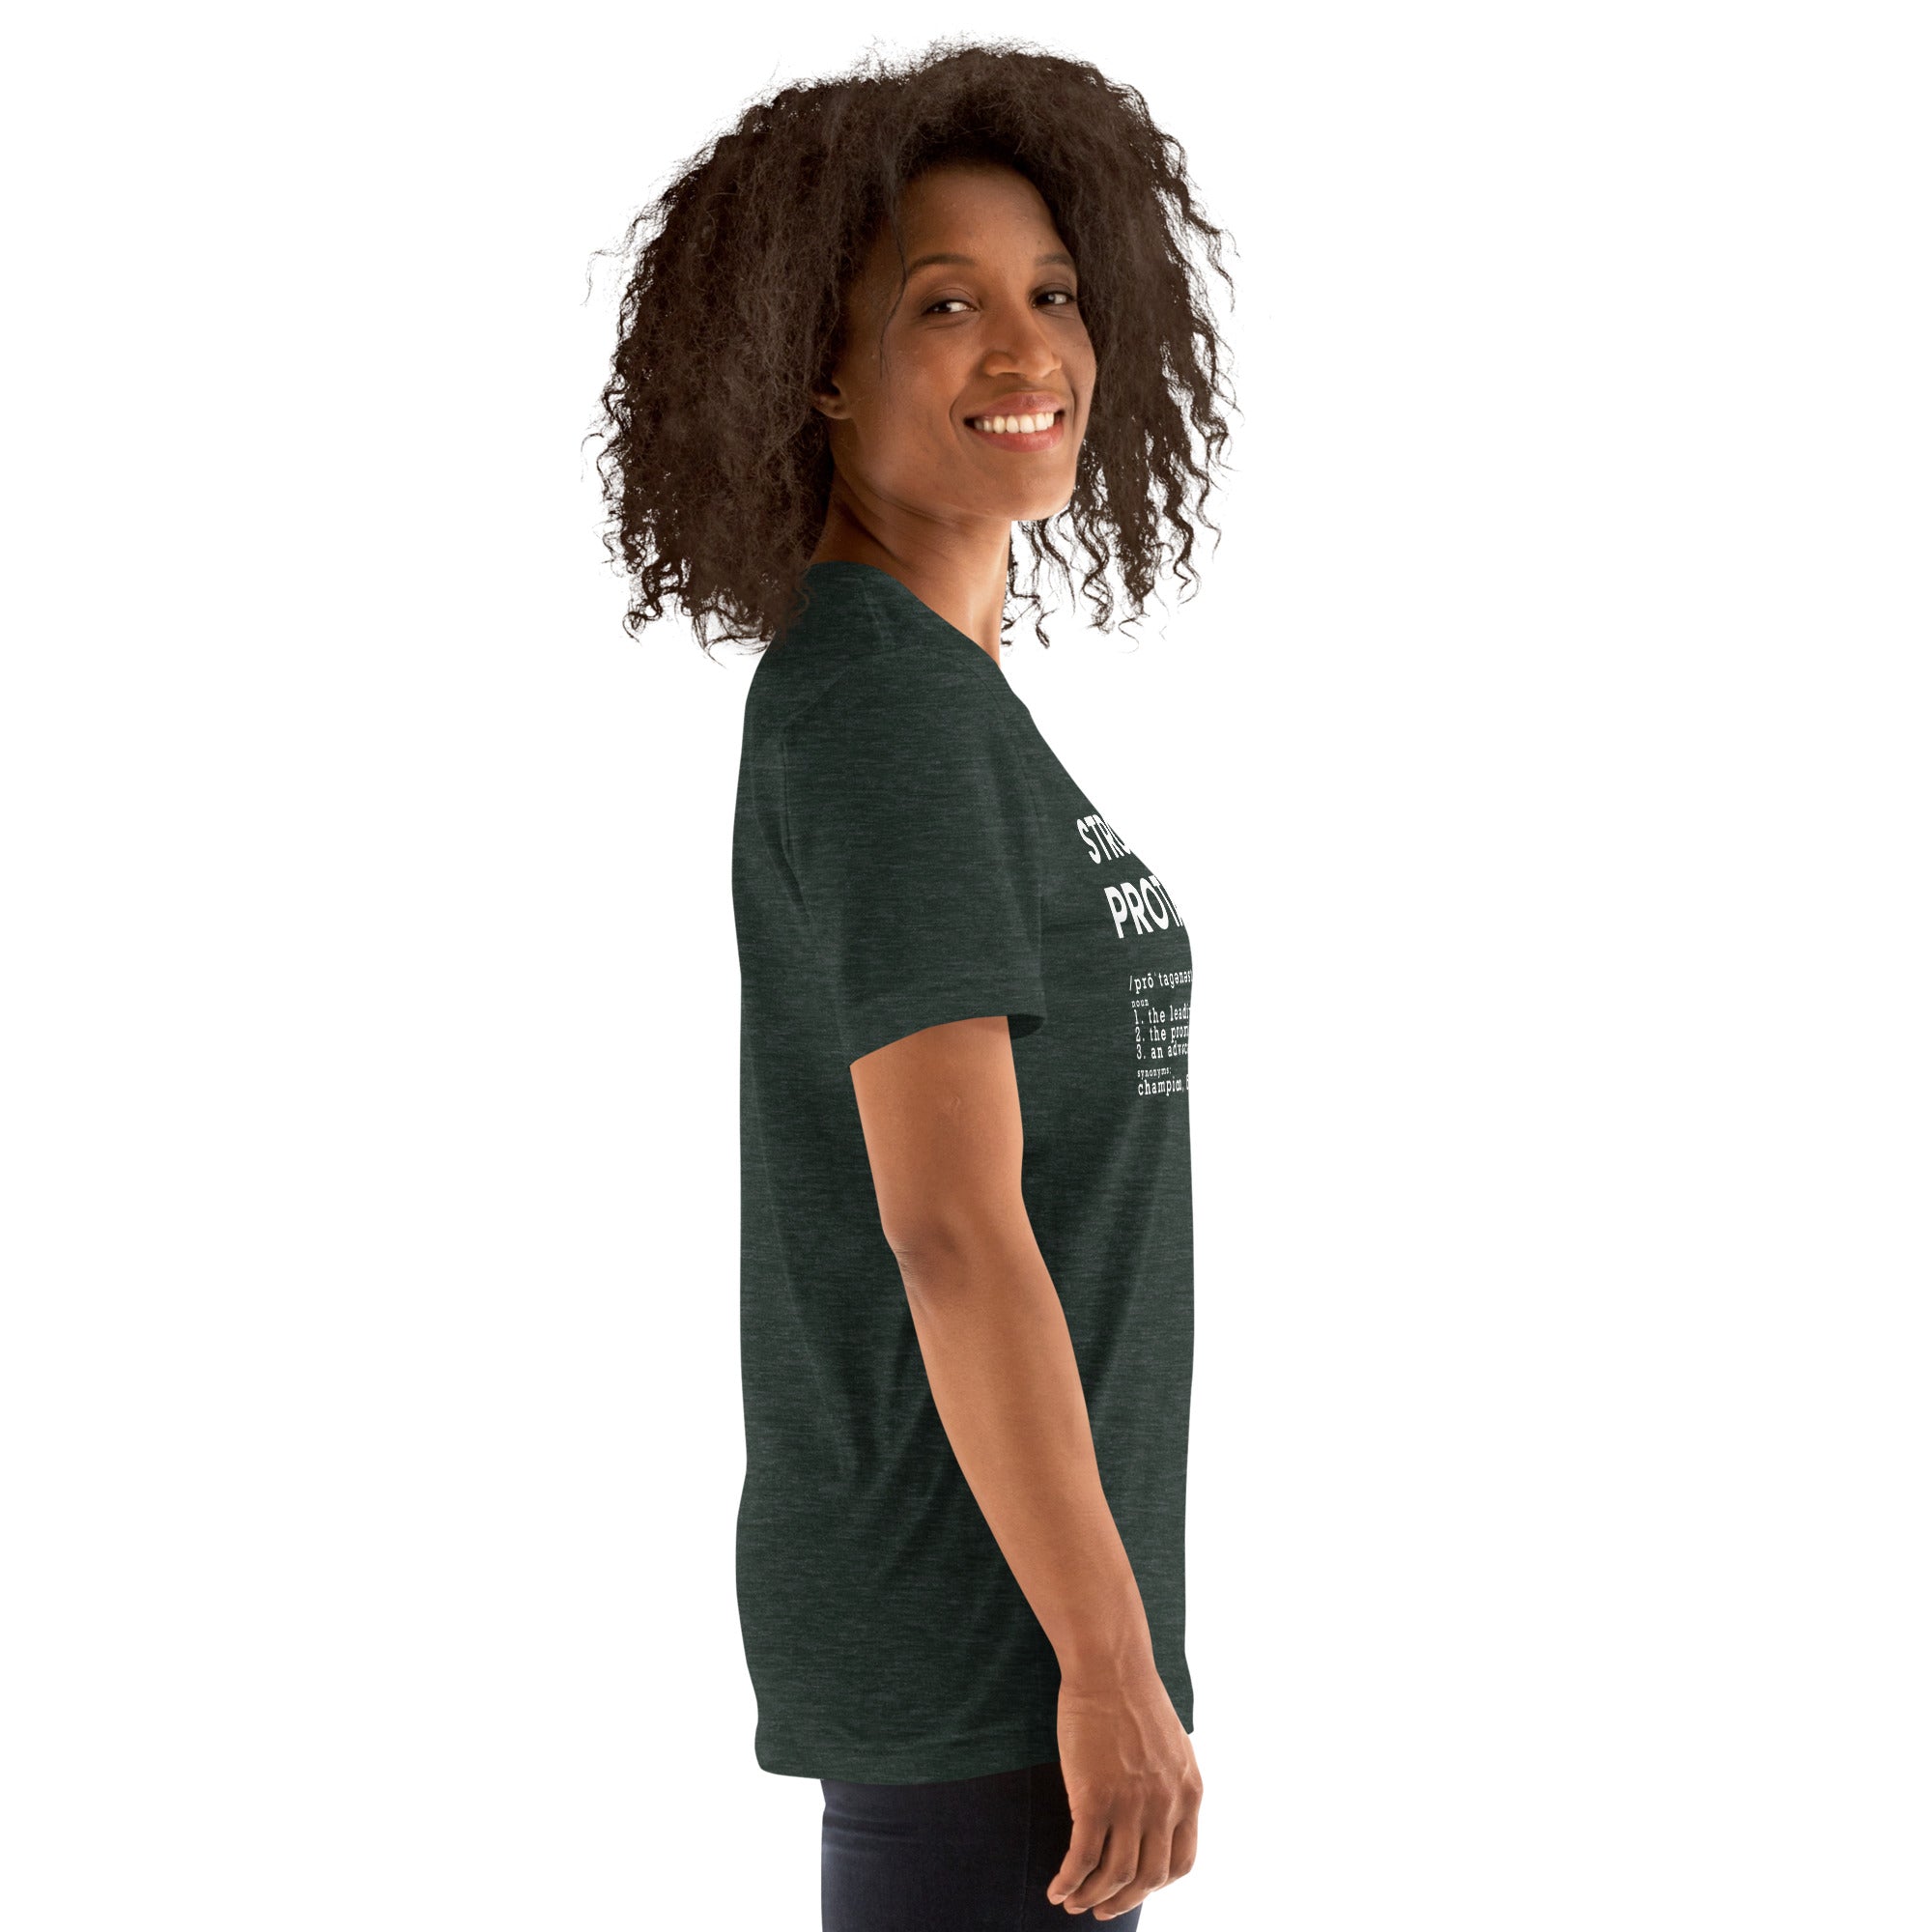 Strong Female Protagonist Definition - Staple Unisex T-shirt